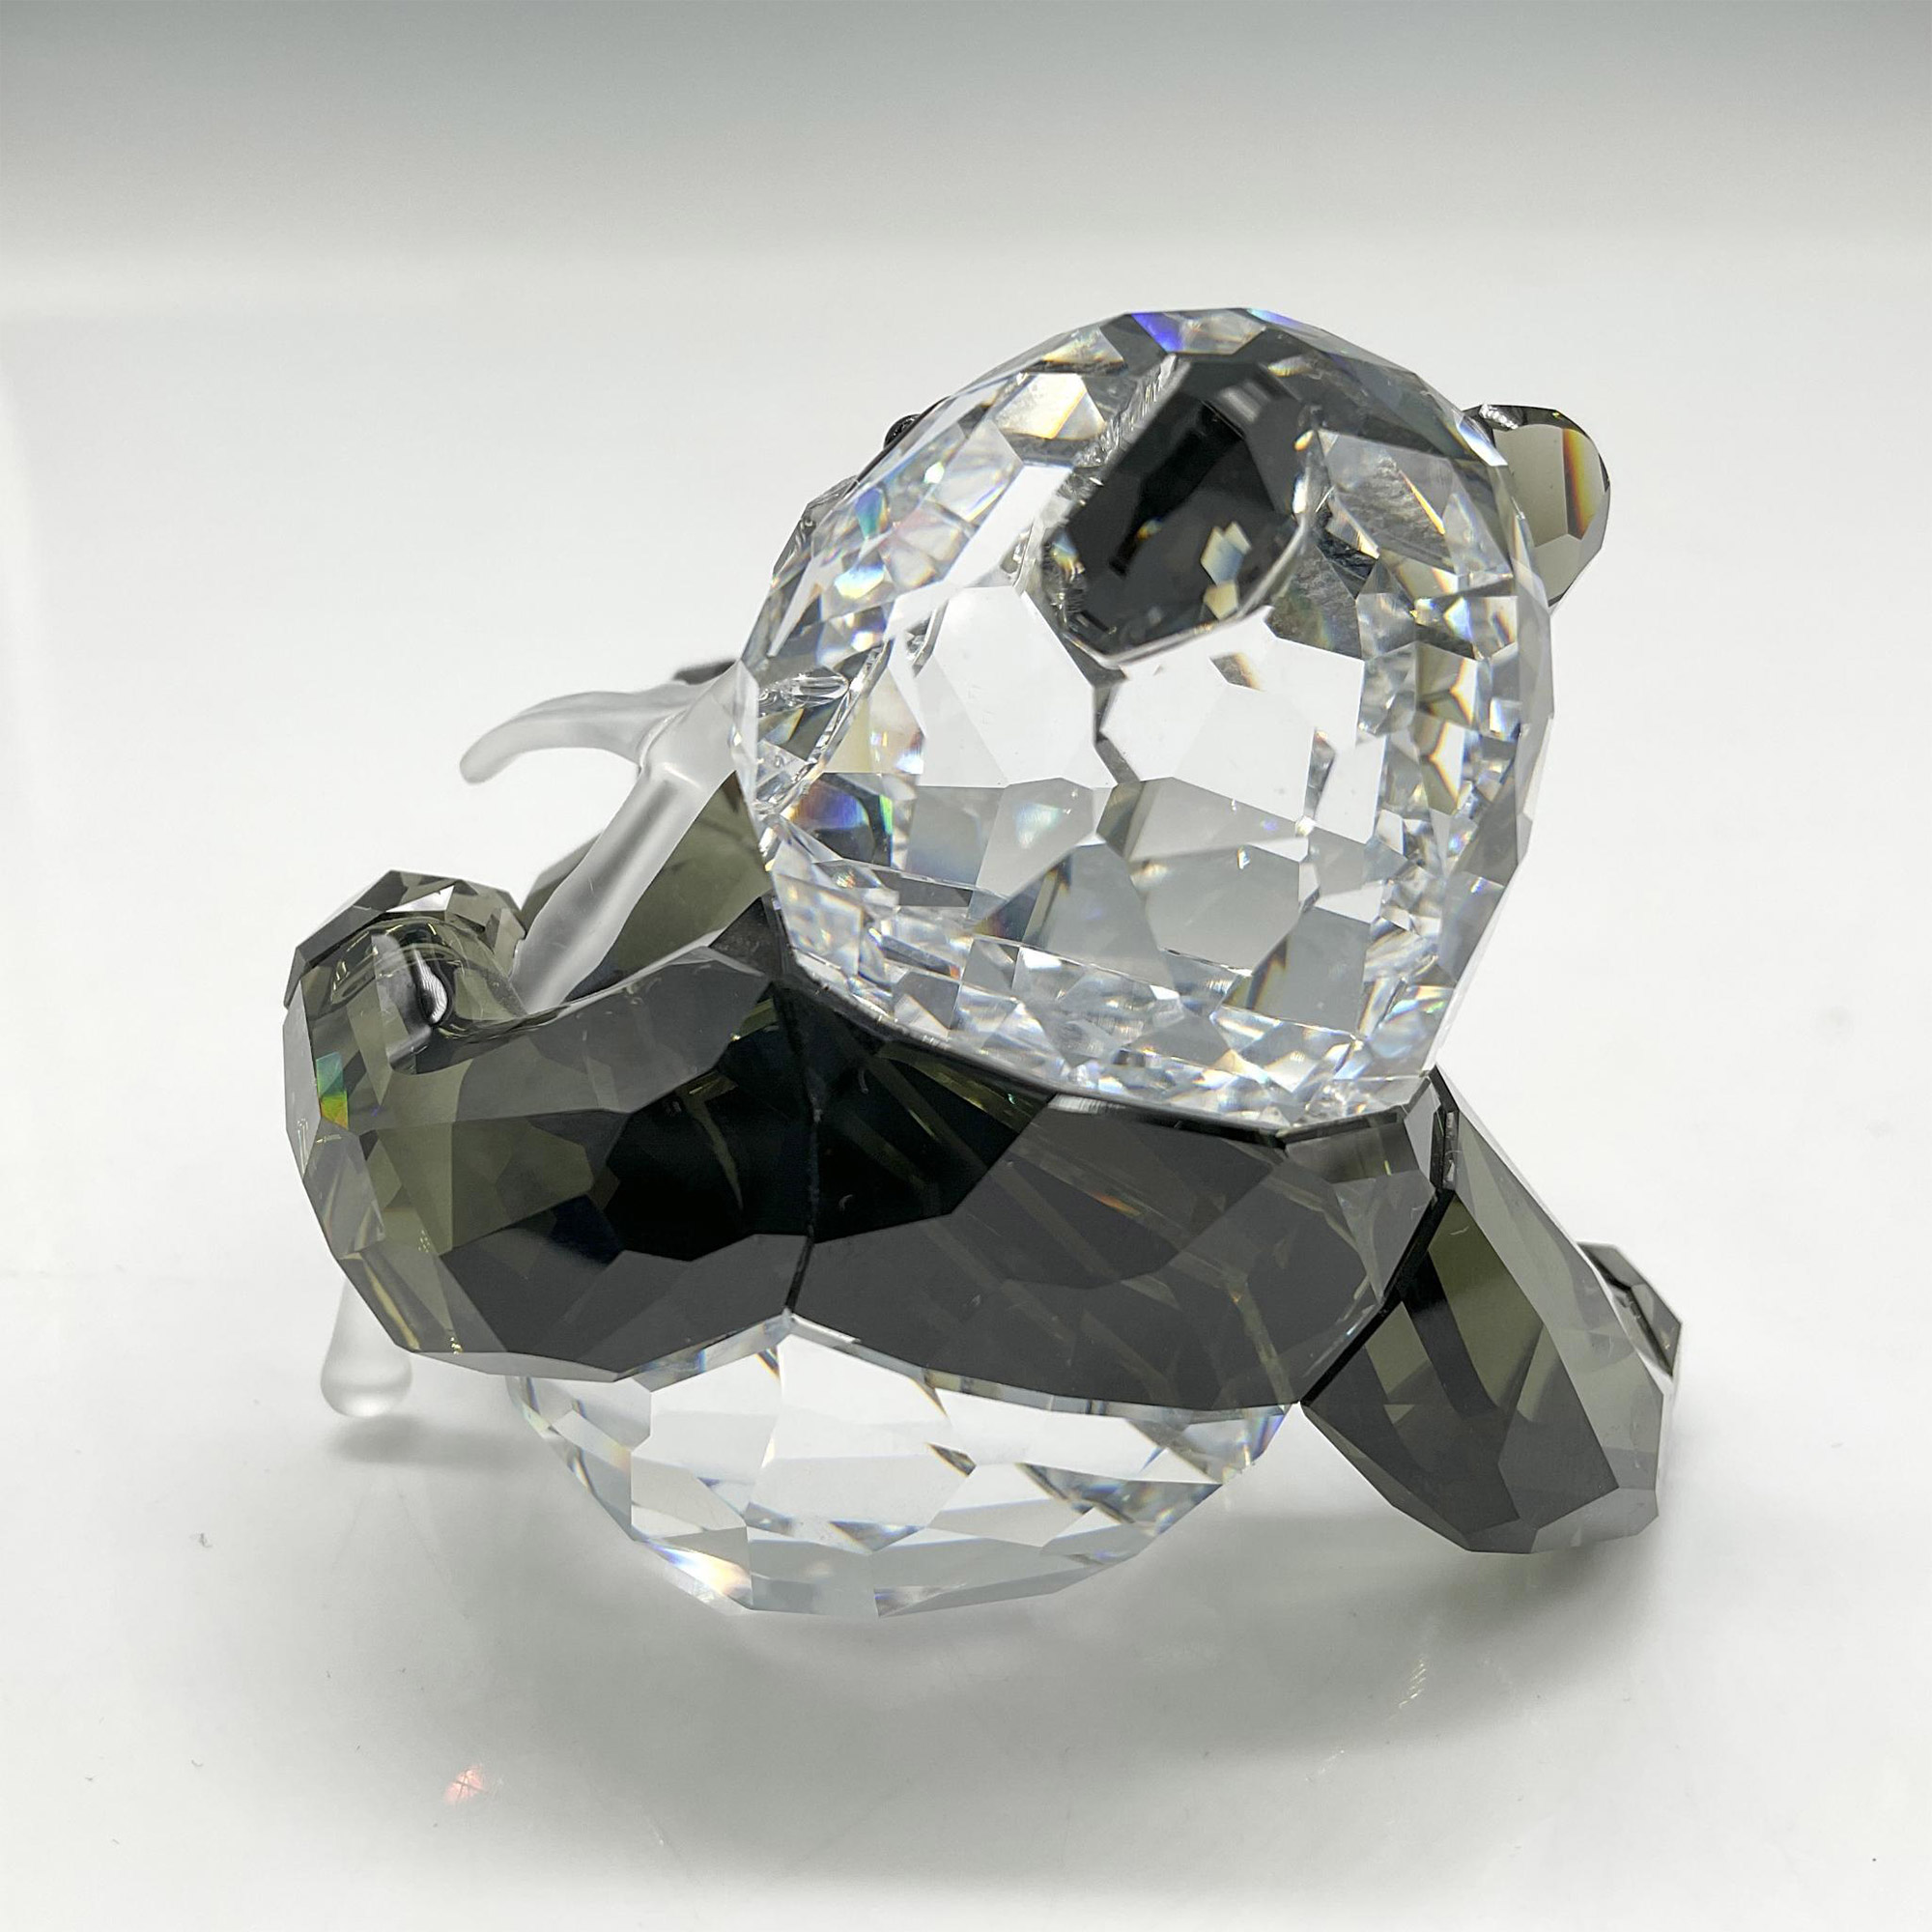 Swarovski Silver Crystal Society Figurine, Panda Cub - Image 2 of 3